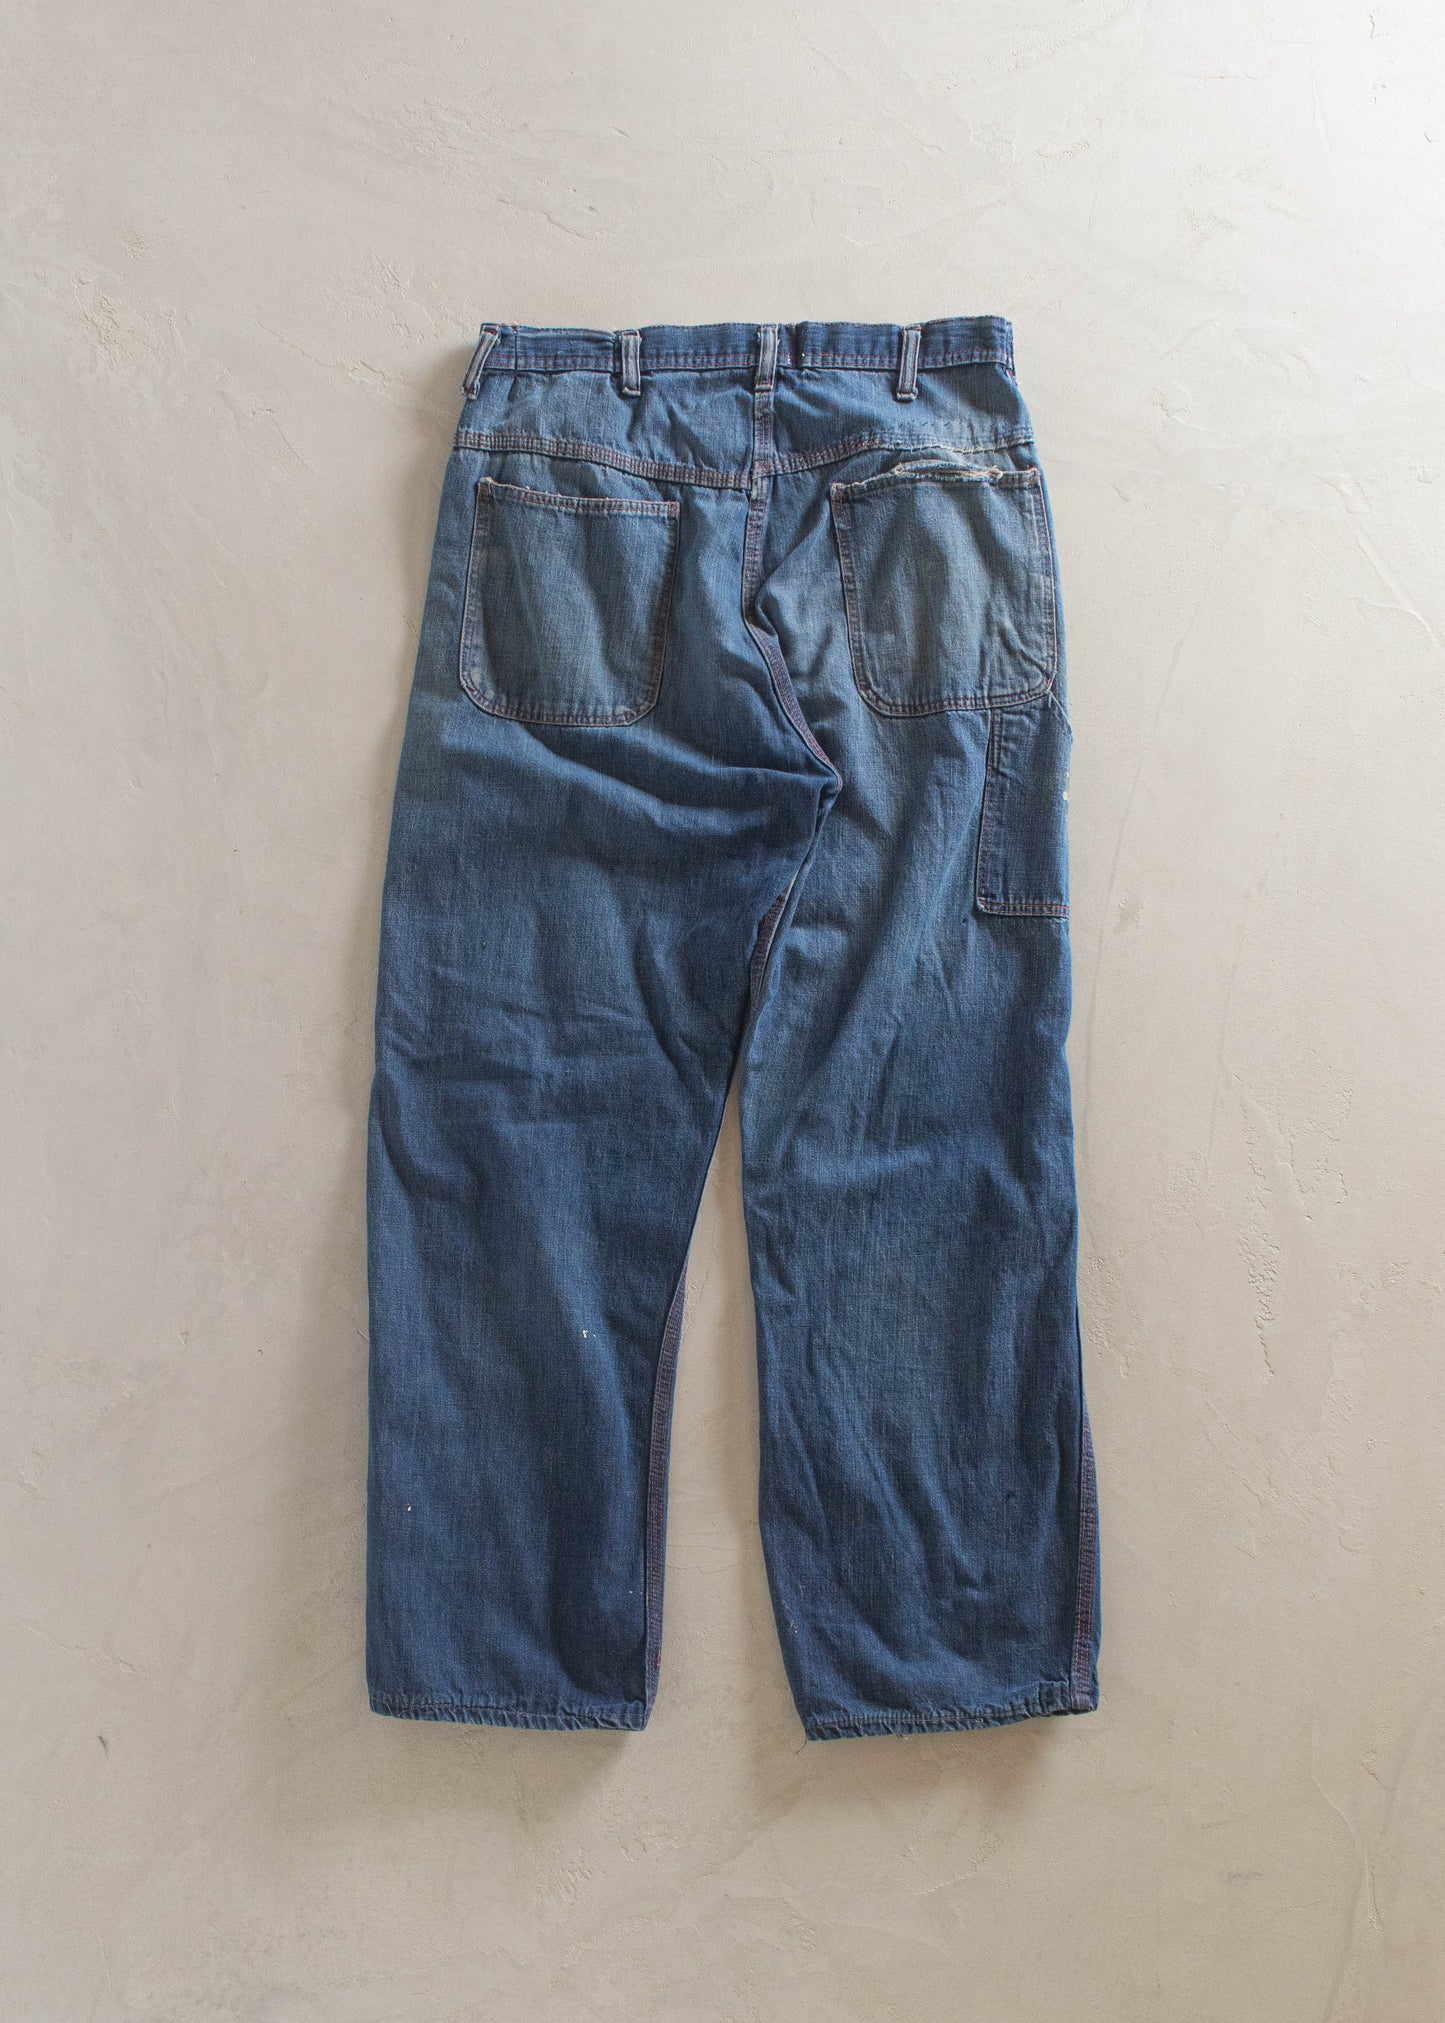 1950s Sanforized Denim Carpenter Pants Size Women's 30 Men's 32